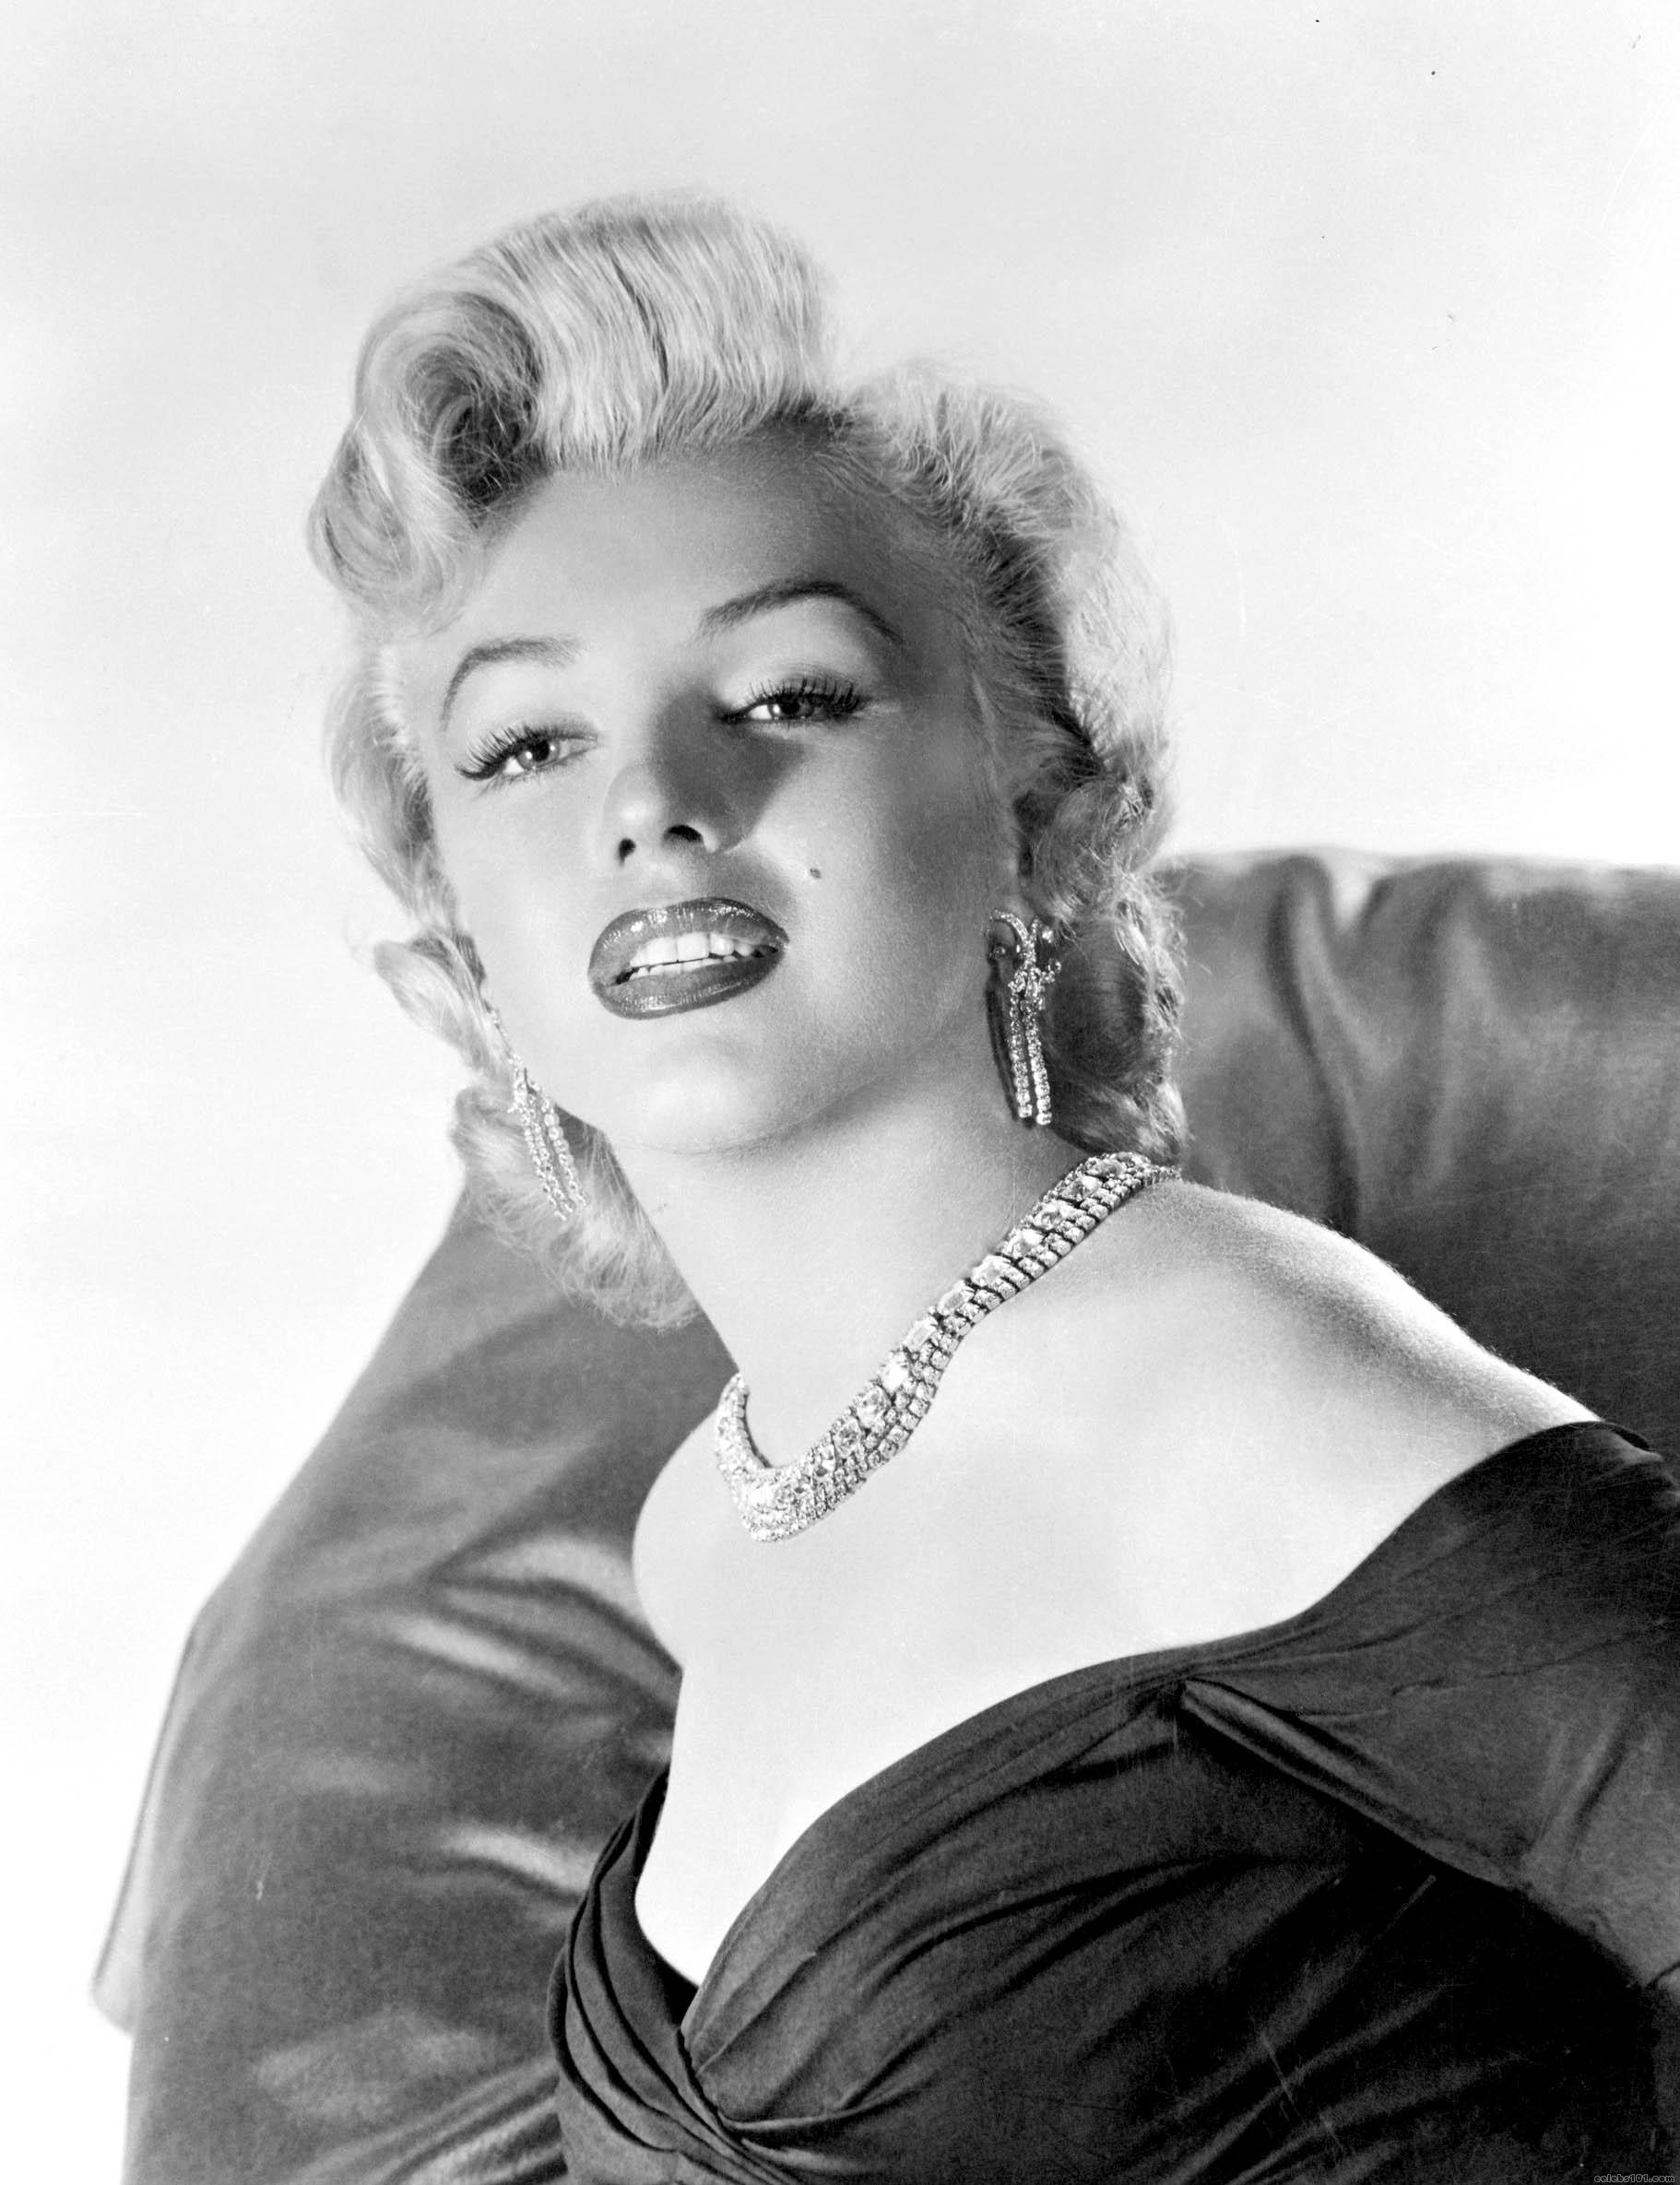 Marilyn Monroe - High quality image size 1822x2370 of Marilyn Monroe Photos